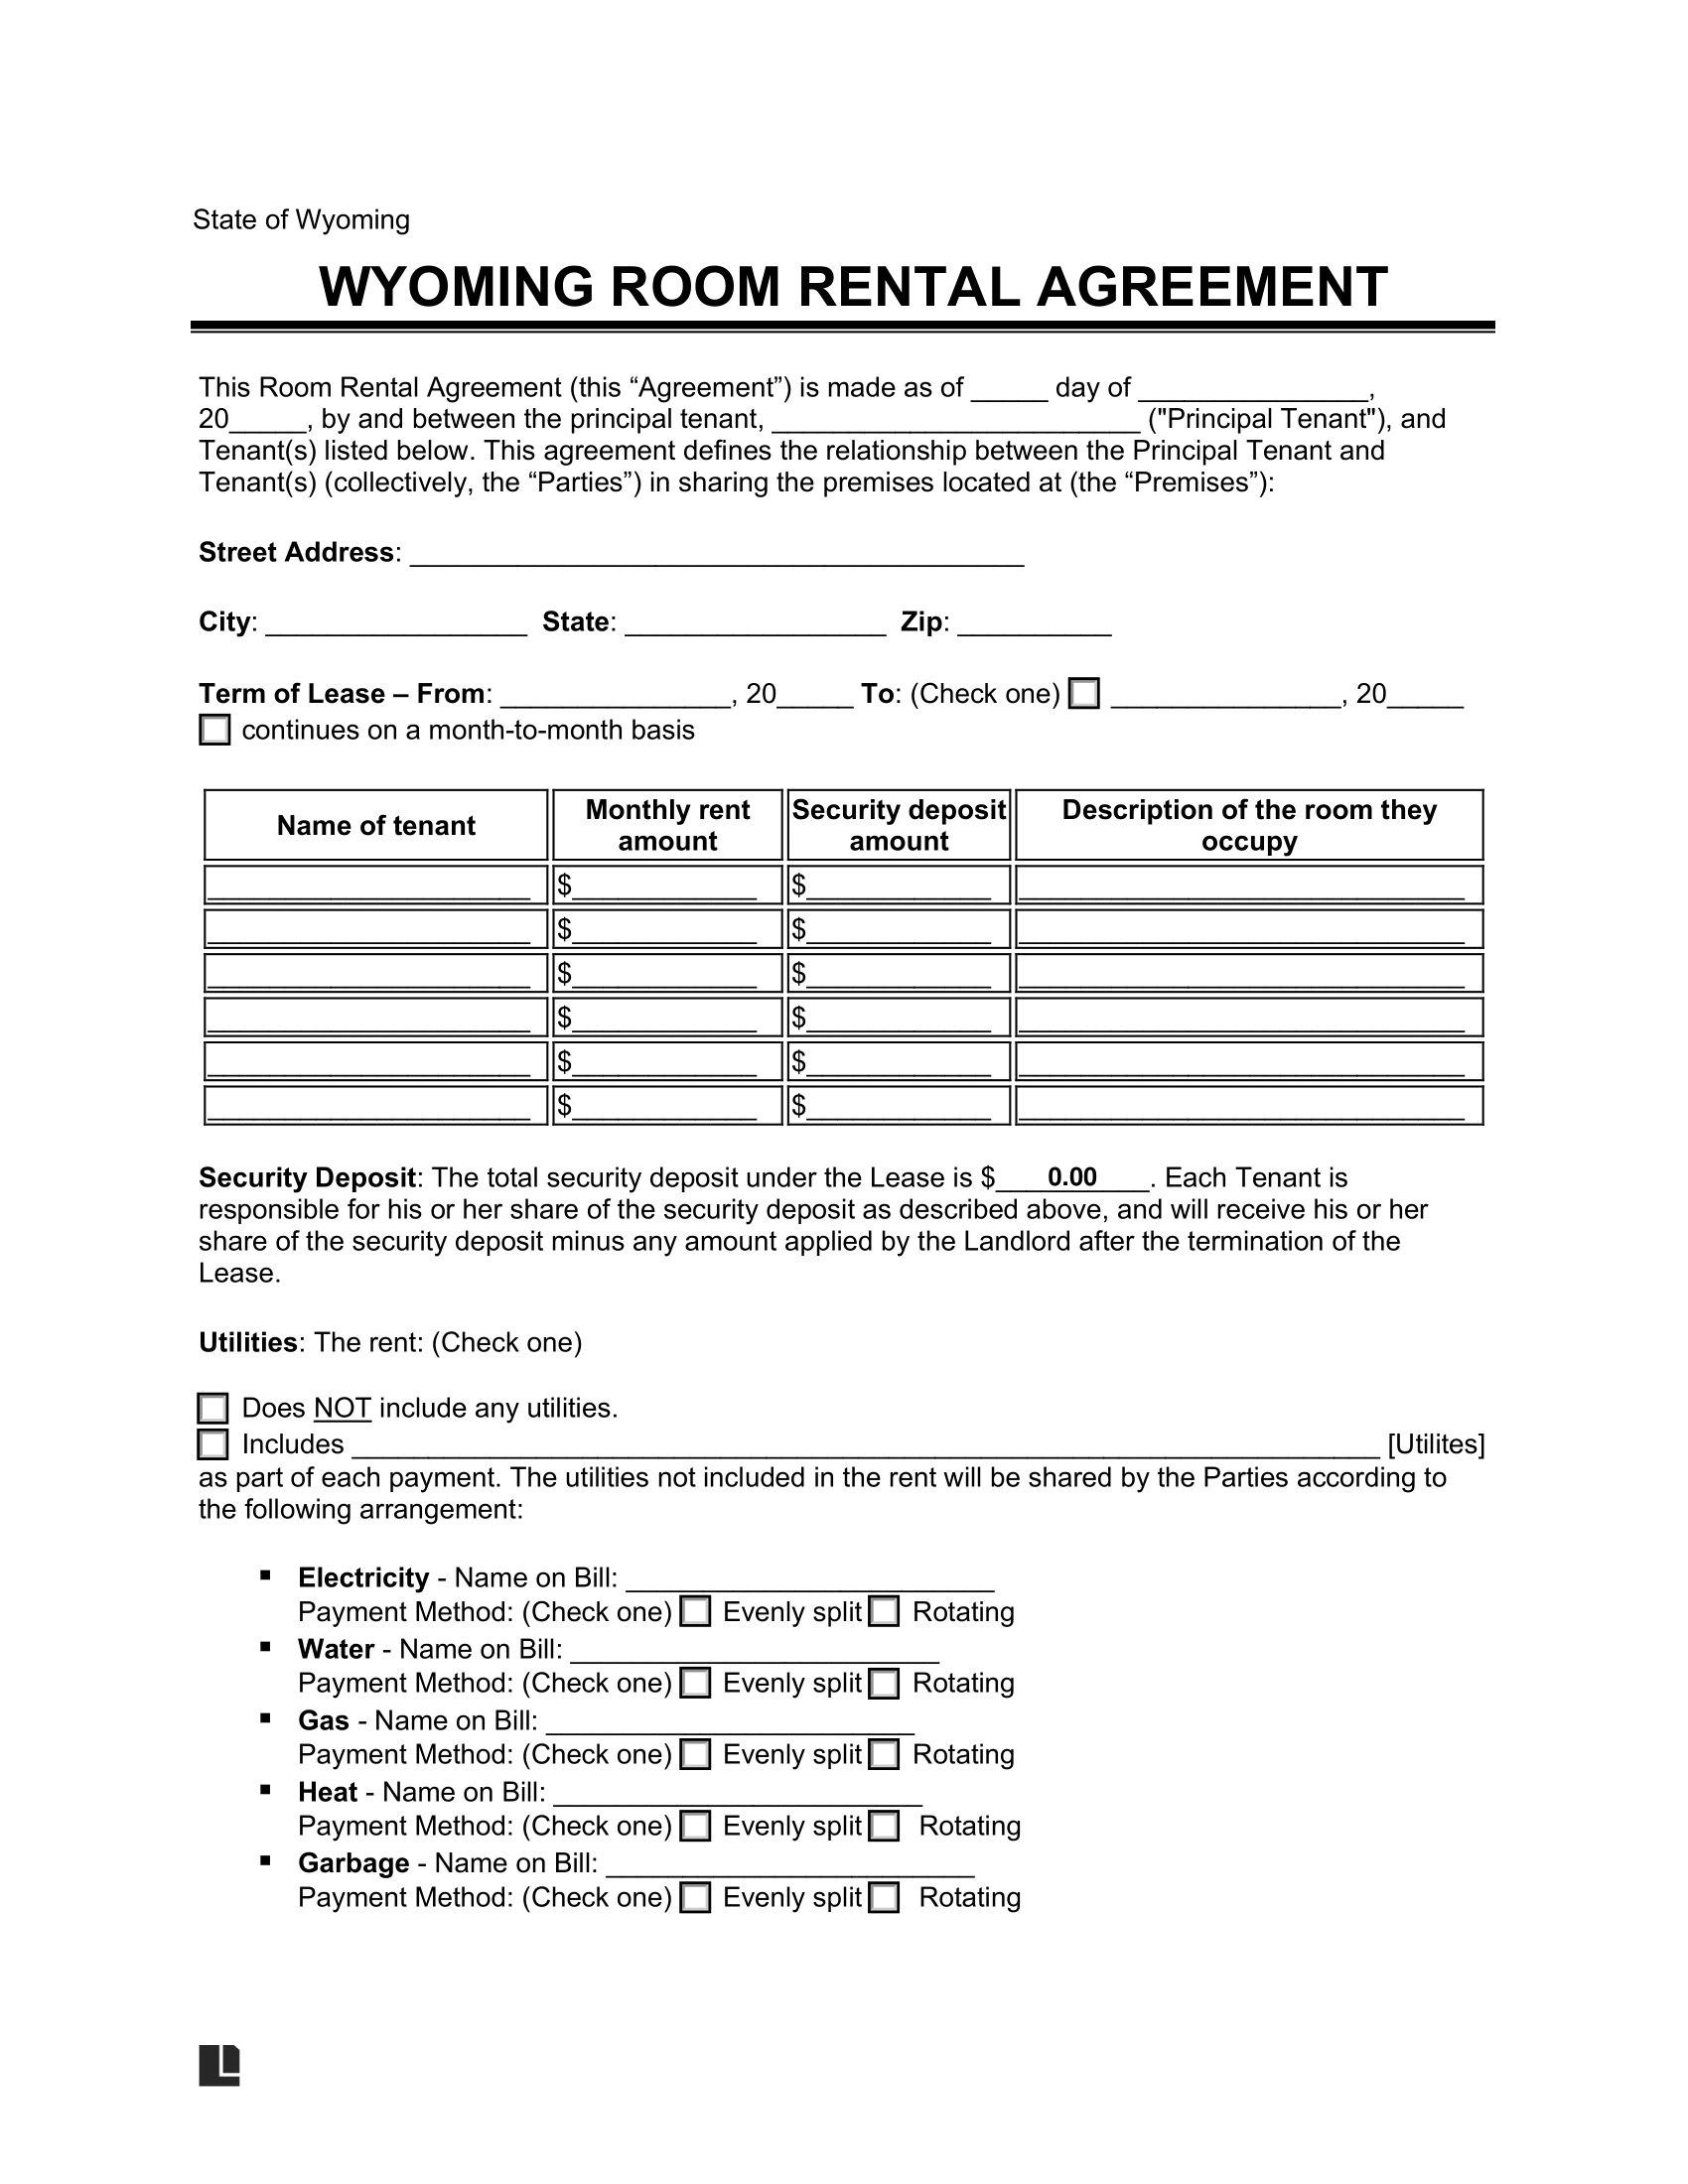 Wyoming Room Rental Agreement